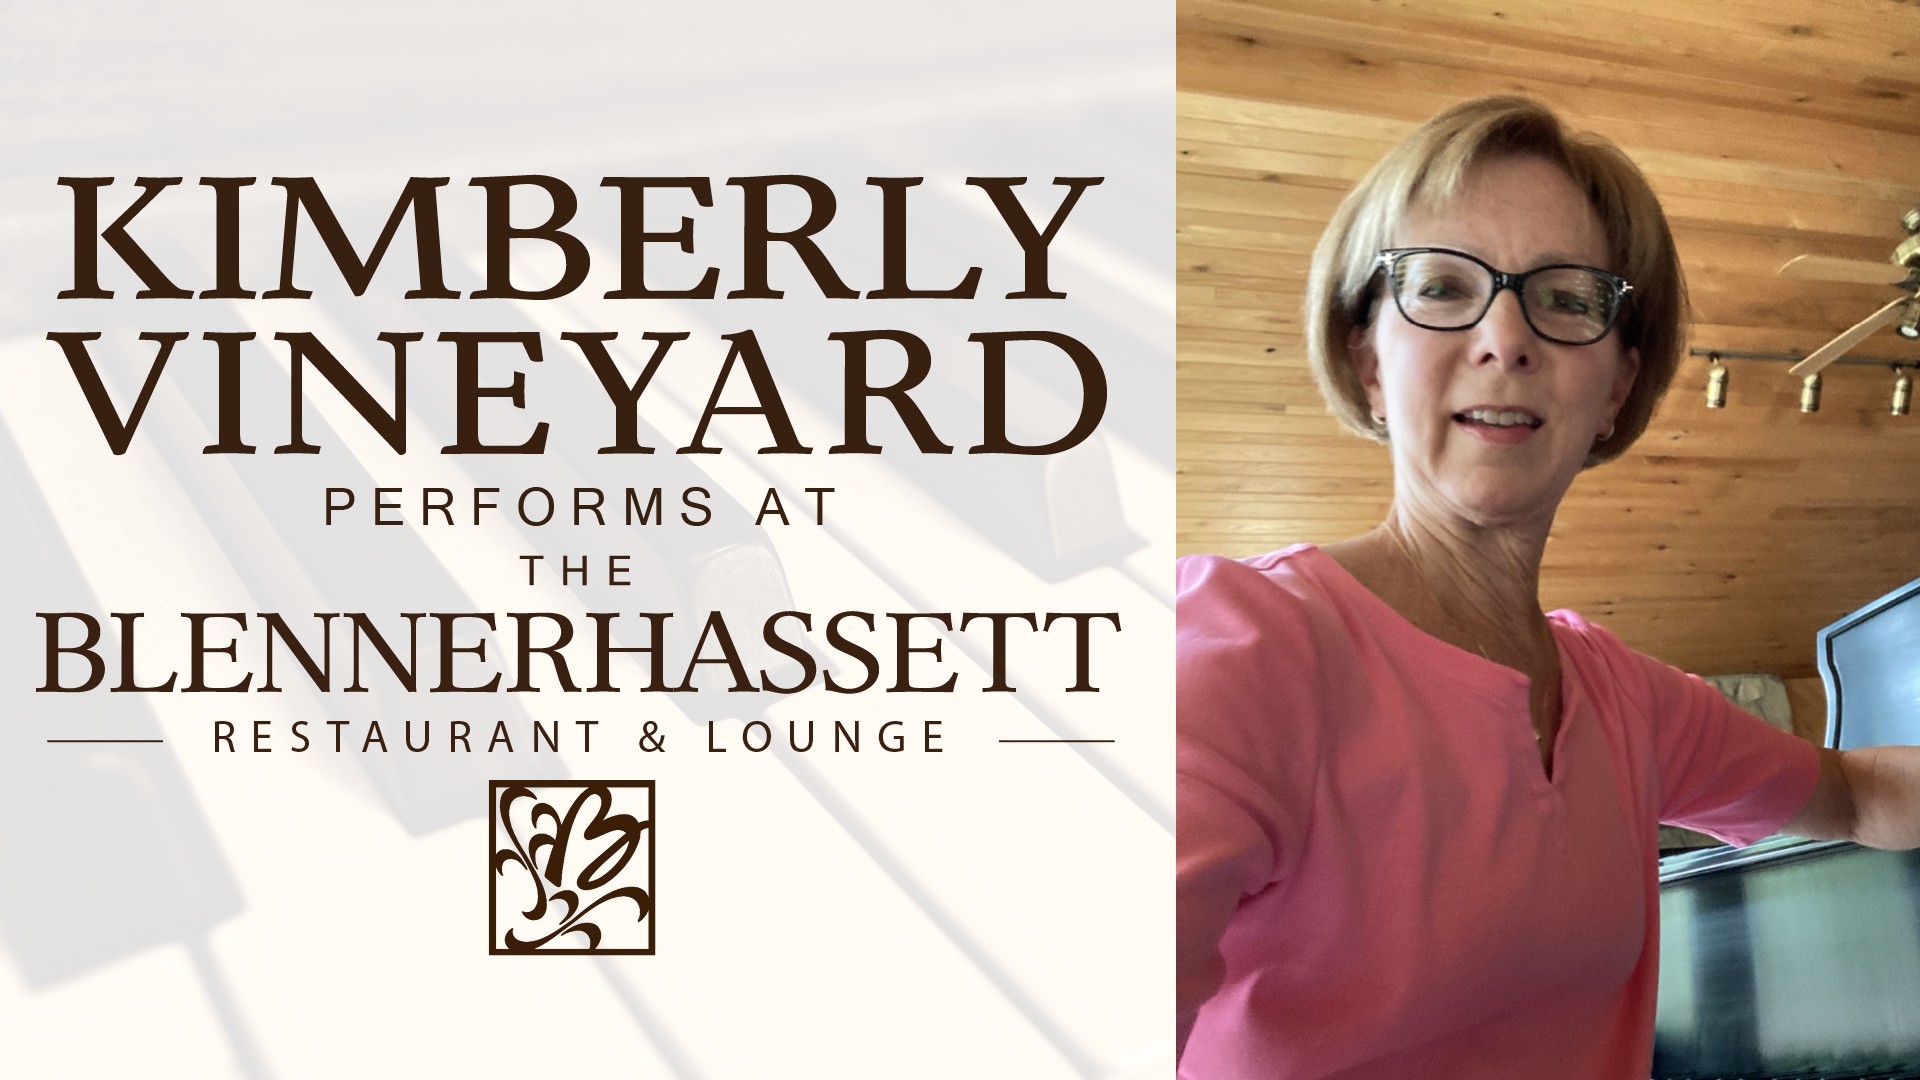 Kimberly Vineyard plays at The Blennerhassett Restaurant & Lounge